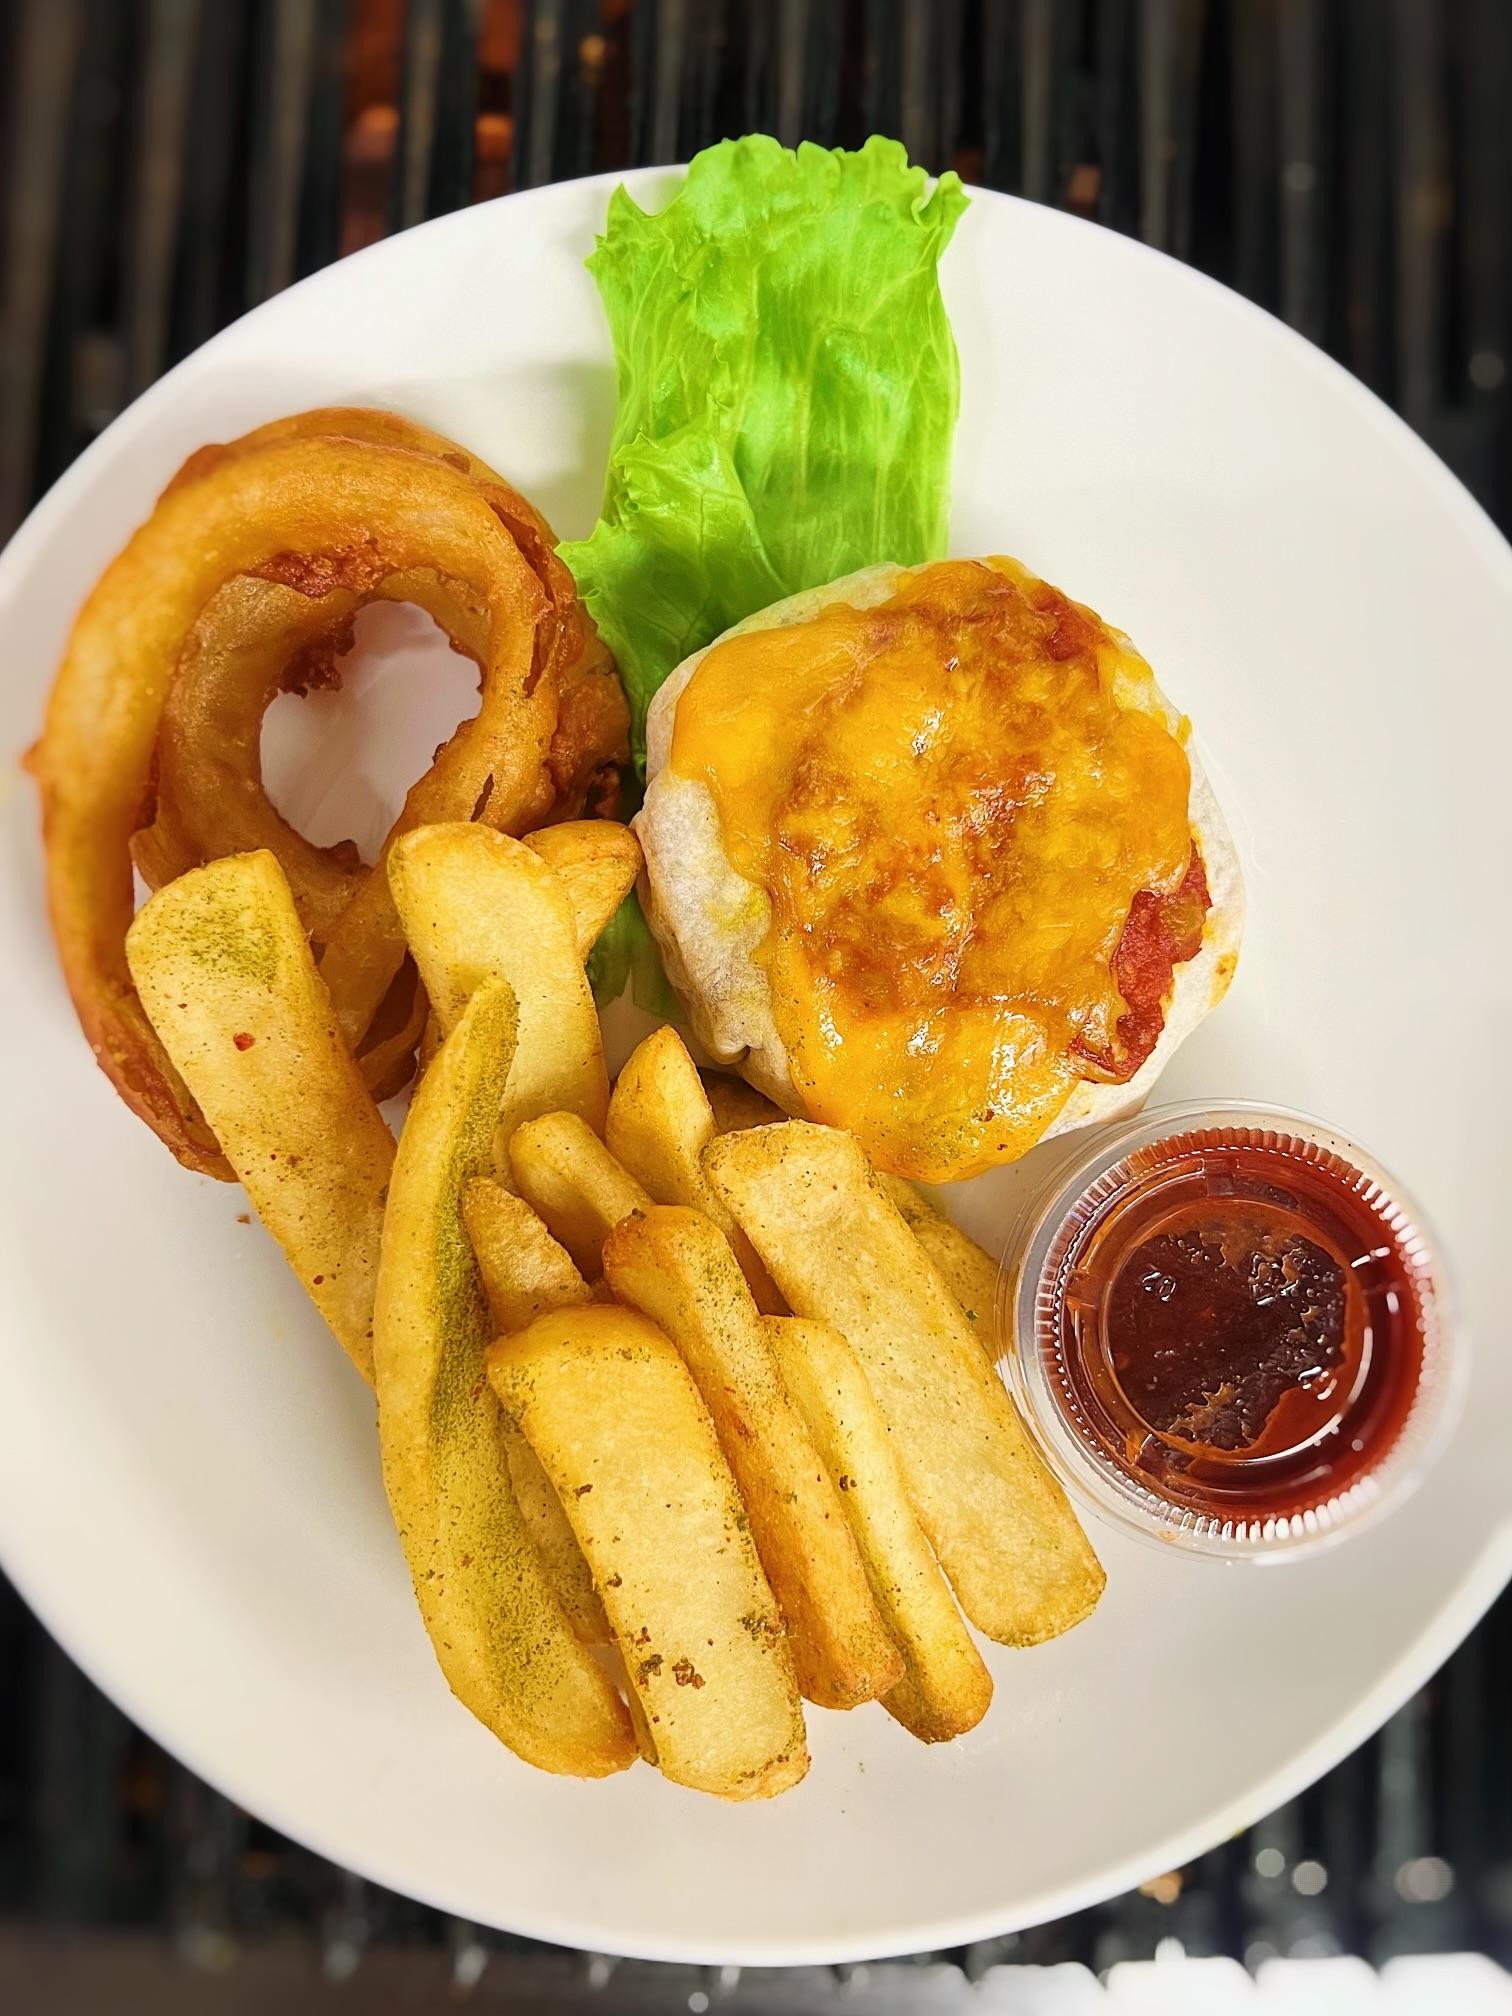 Zanzibar spicy beef samosa burger with dry rub masala fries